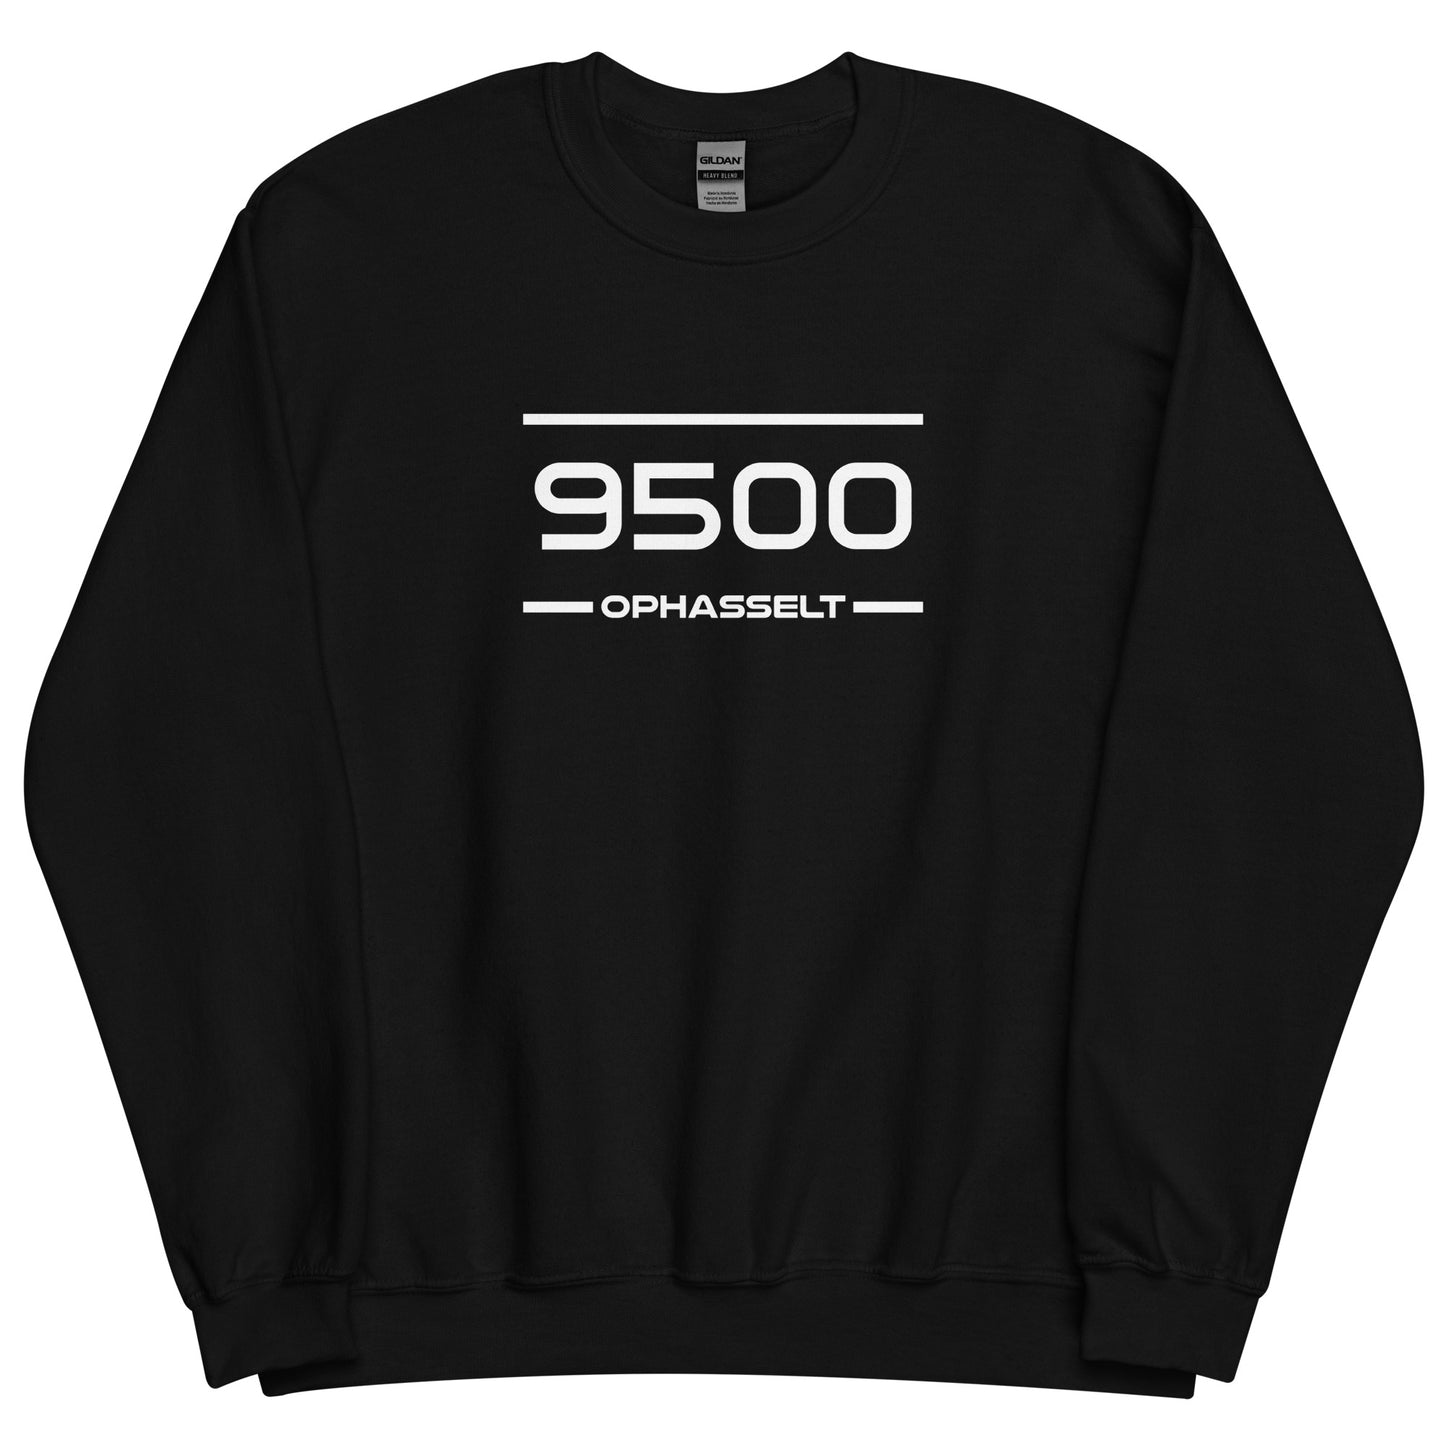 Sweater - 9500 - Ophasselt (M/V)